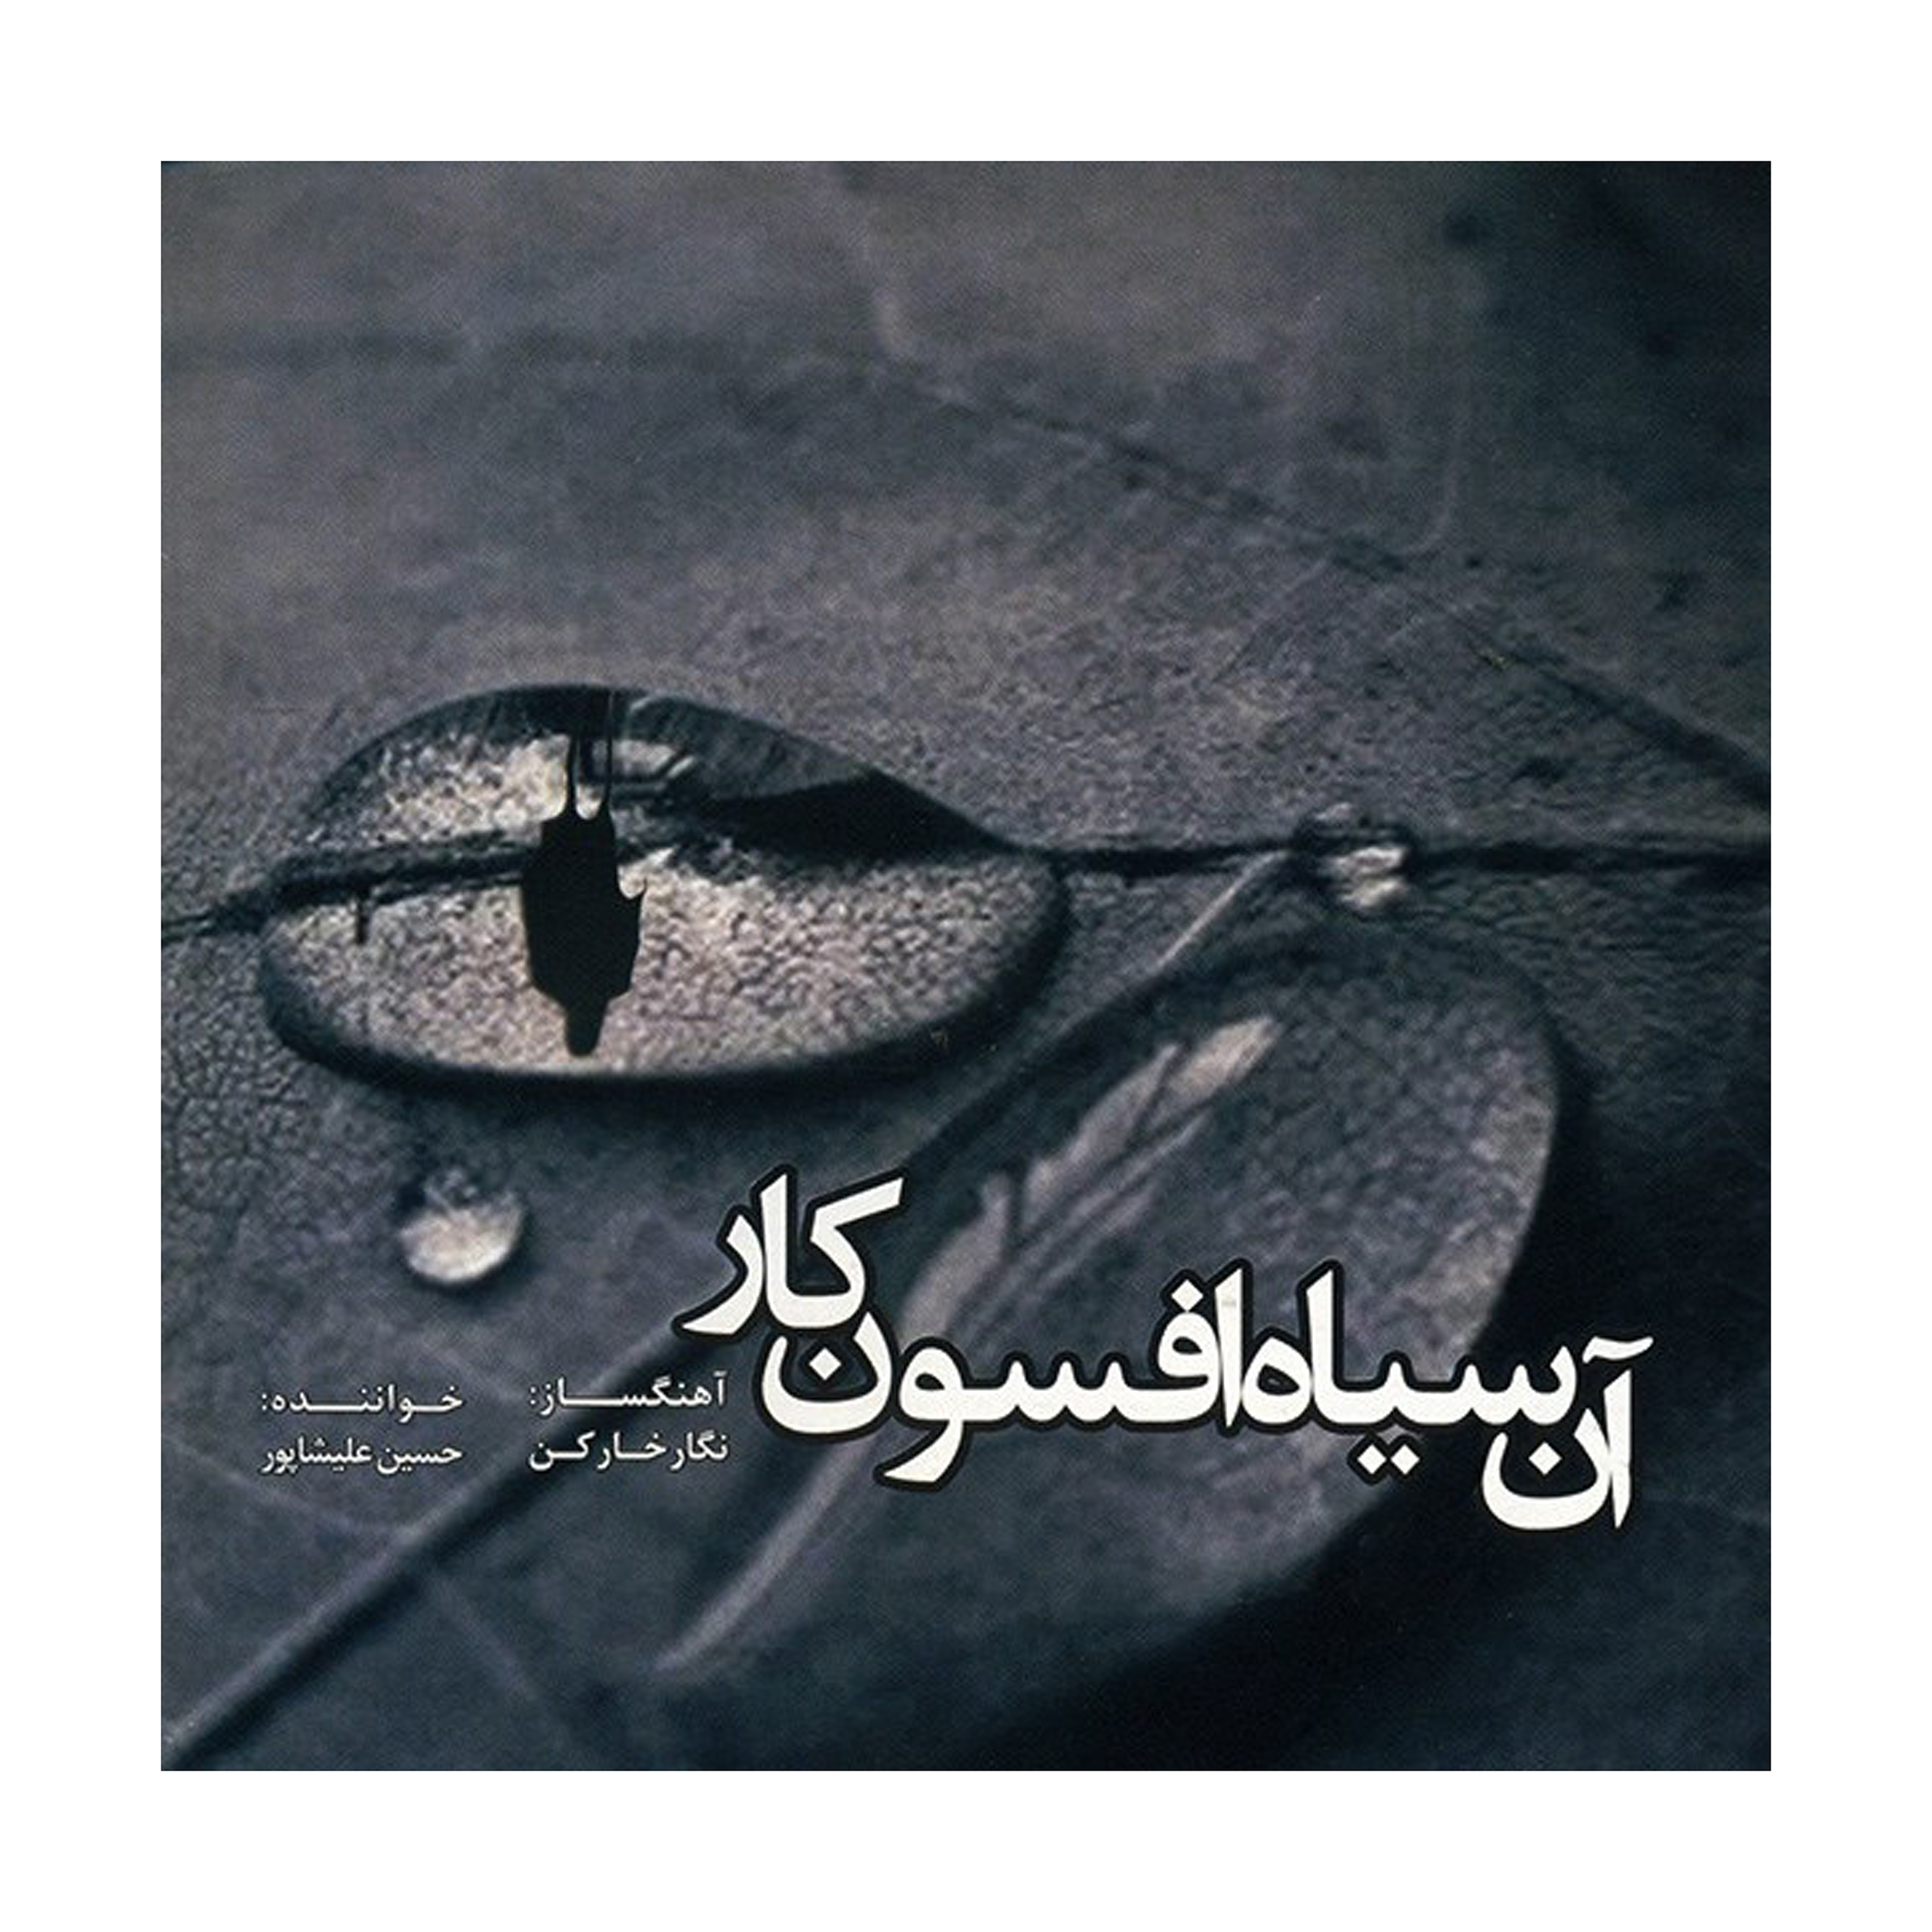 آلبوم موسیقی آن سیاه افسونکار اثر حسین علیشاپور